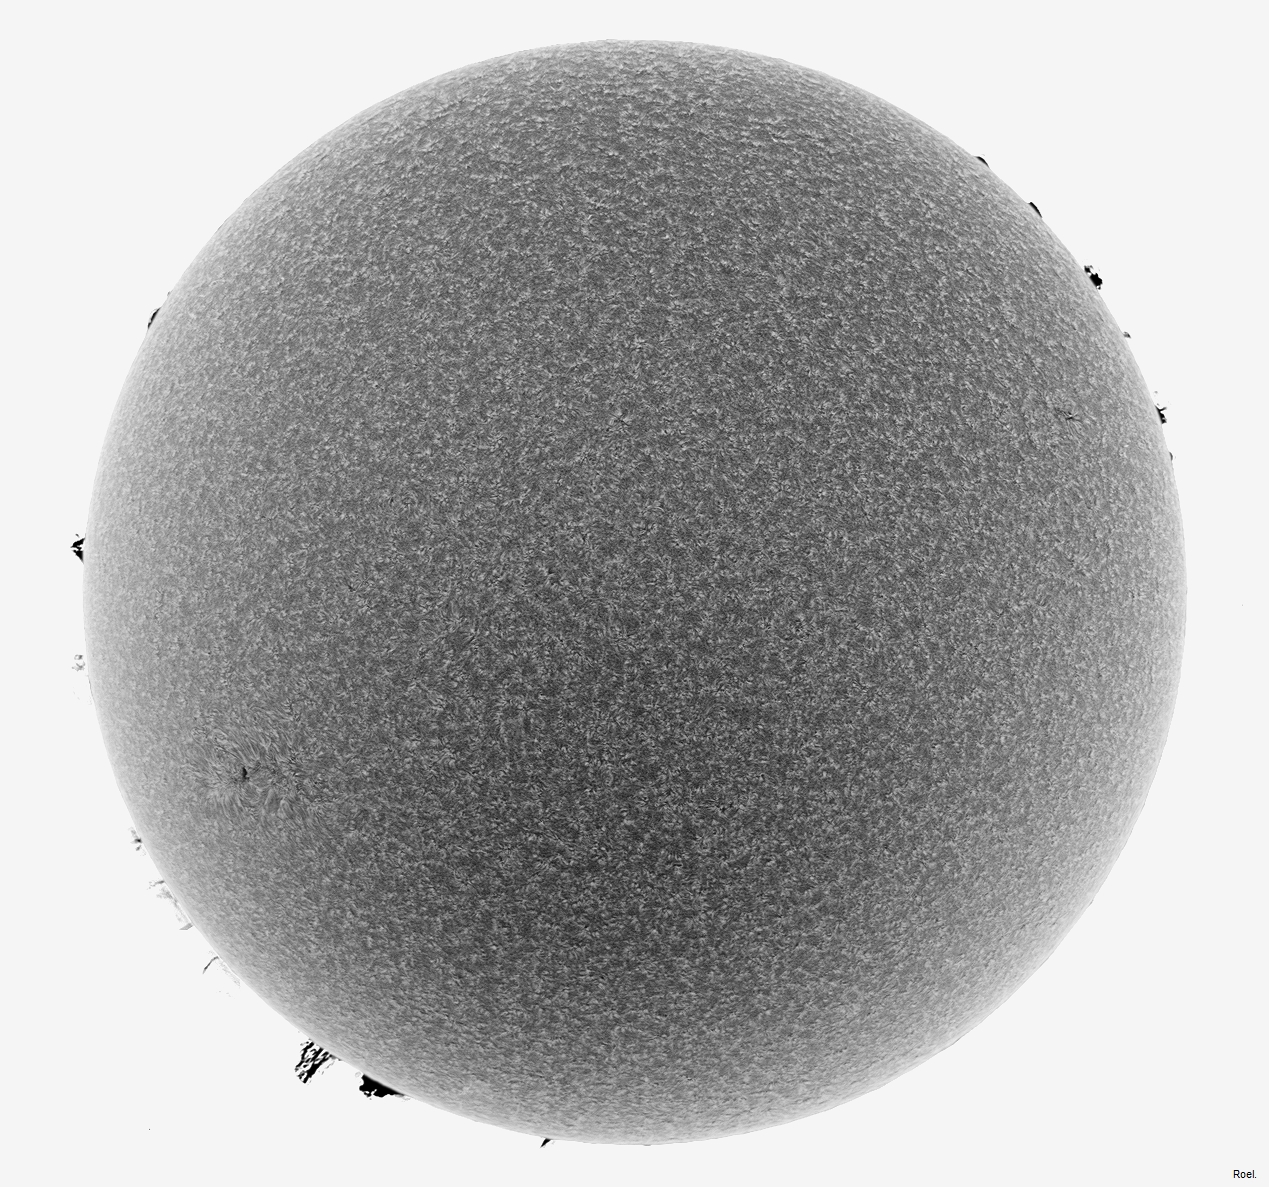 Sol del 31 de julio de 2018-Solarmax 90-DS-BF30-2neg.jpg